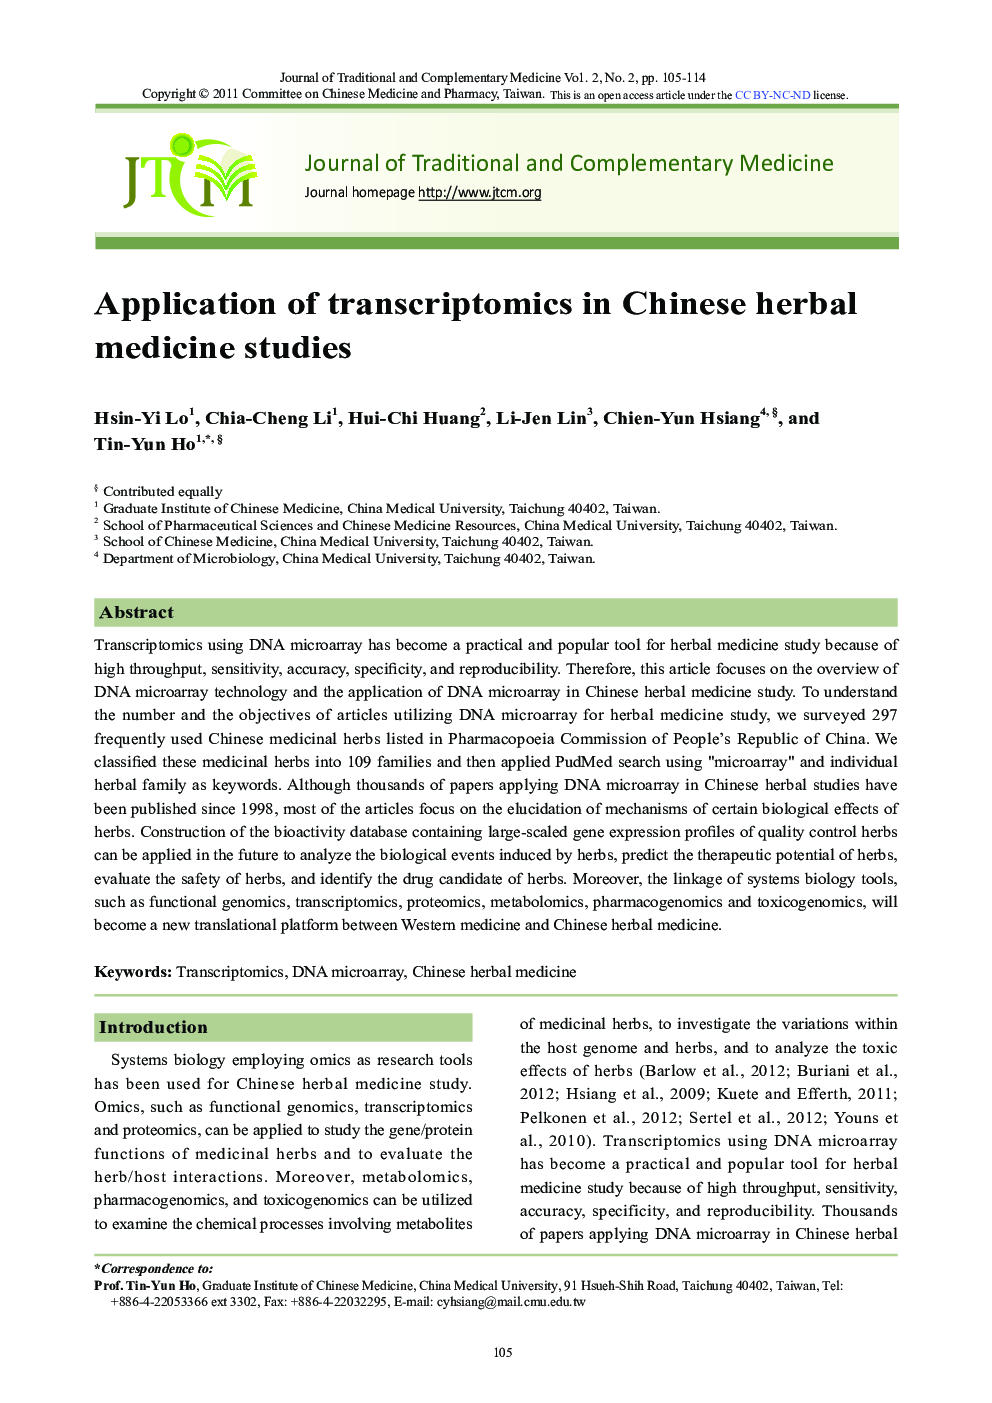 Application of transcriptomics in Chinese herbal medicine studies